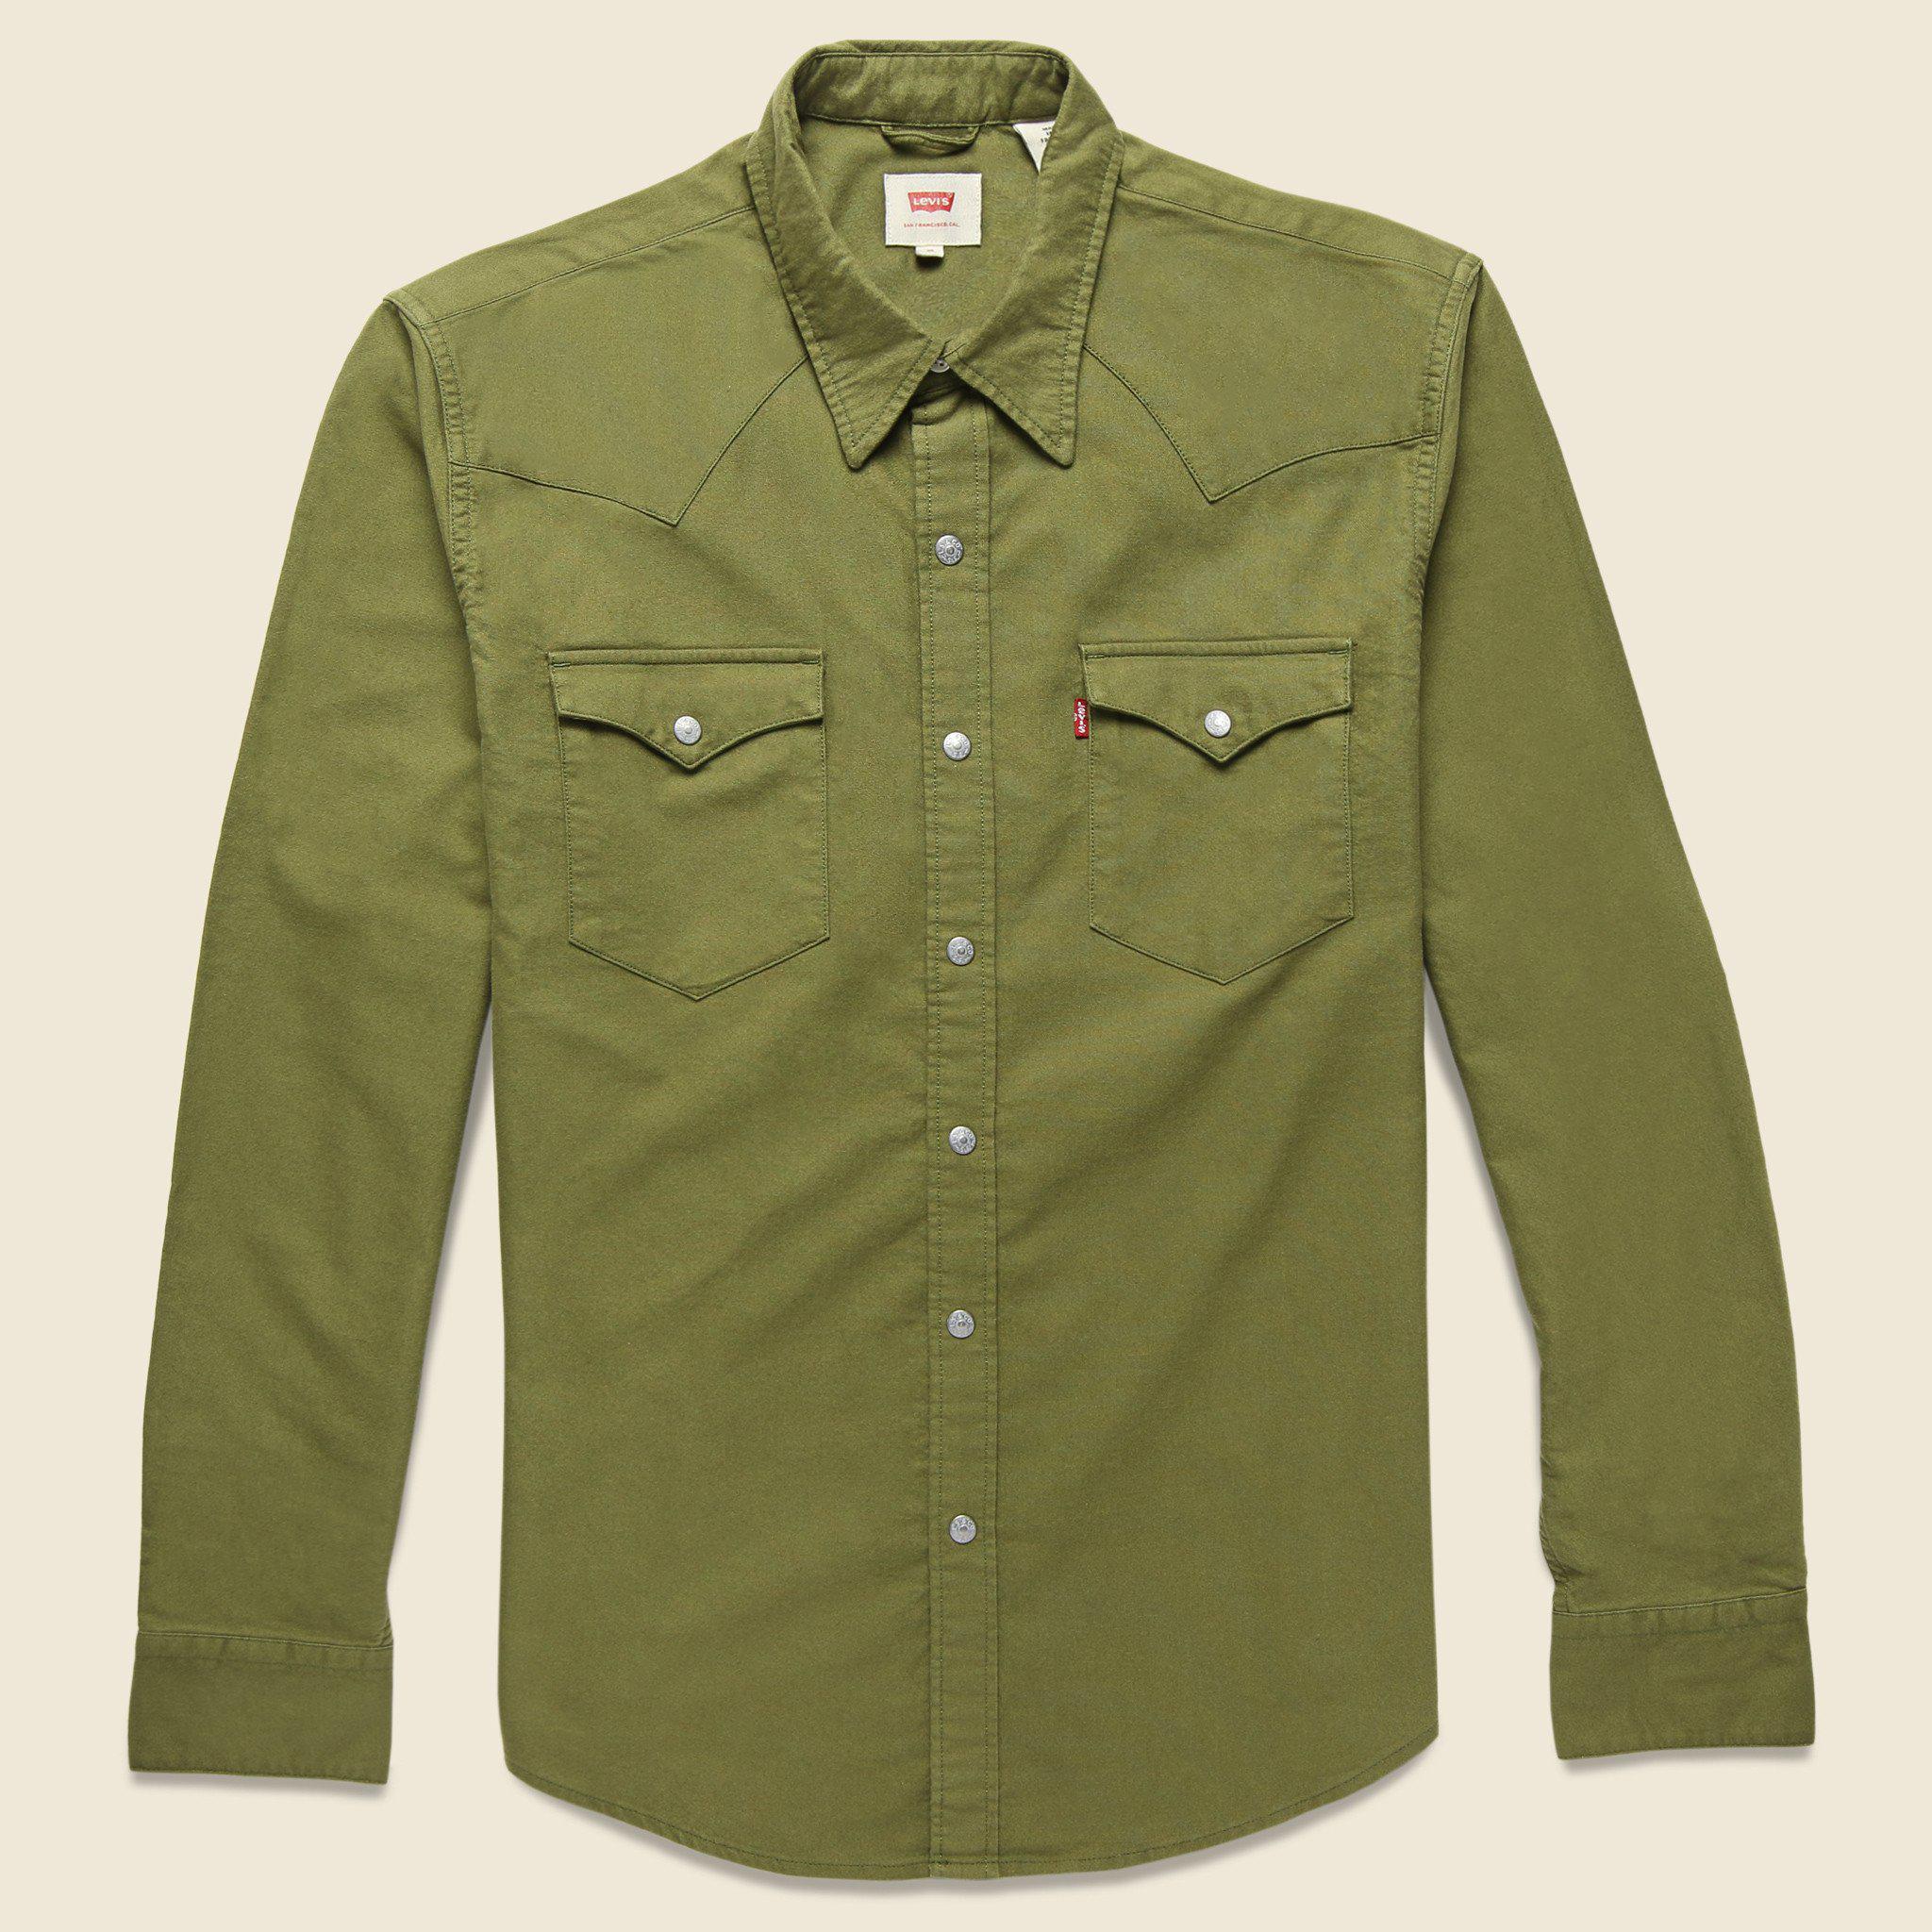 qqqwjf.levi's barstow western shirt green , Off 63%,www.baicompany.com